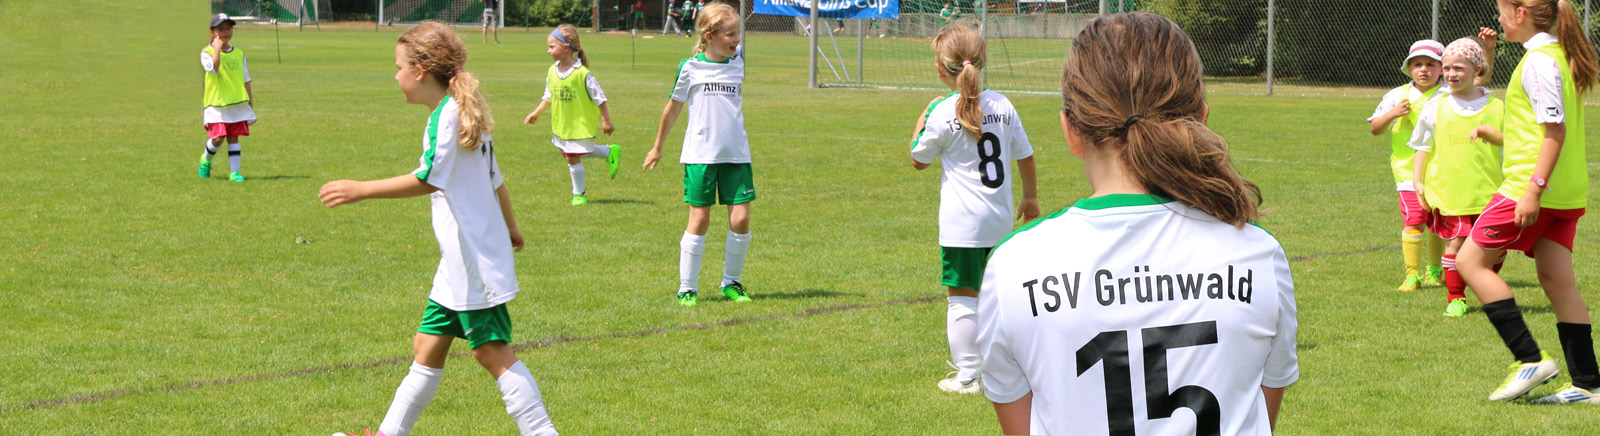 Mädchenfußball im TSV Grünwald